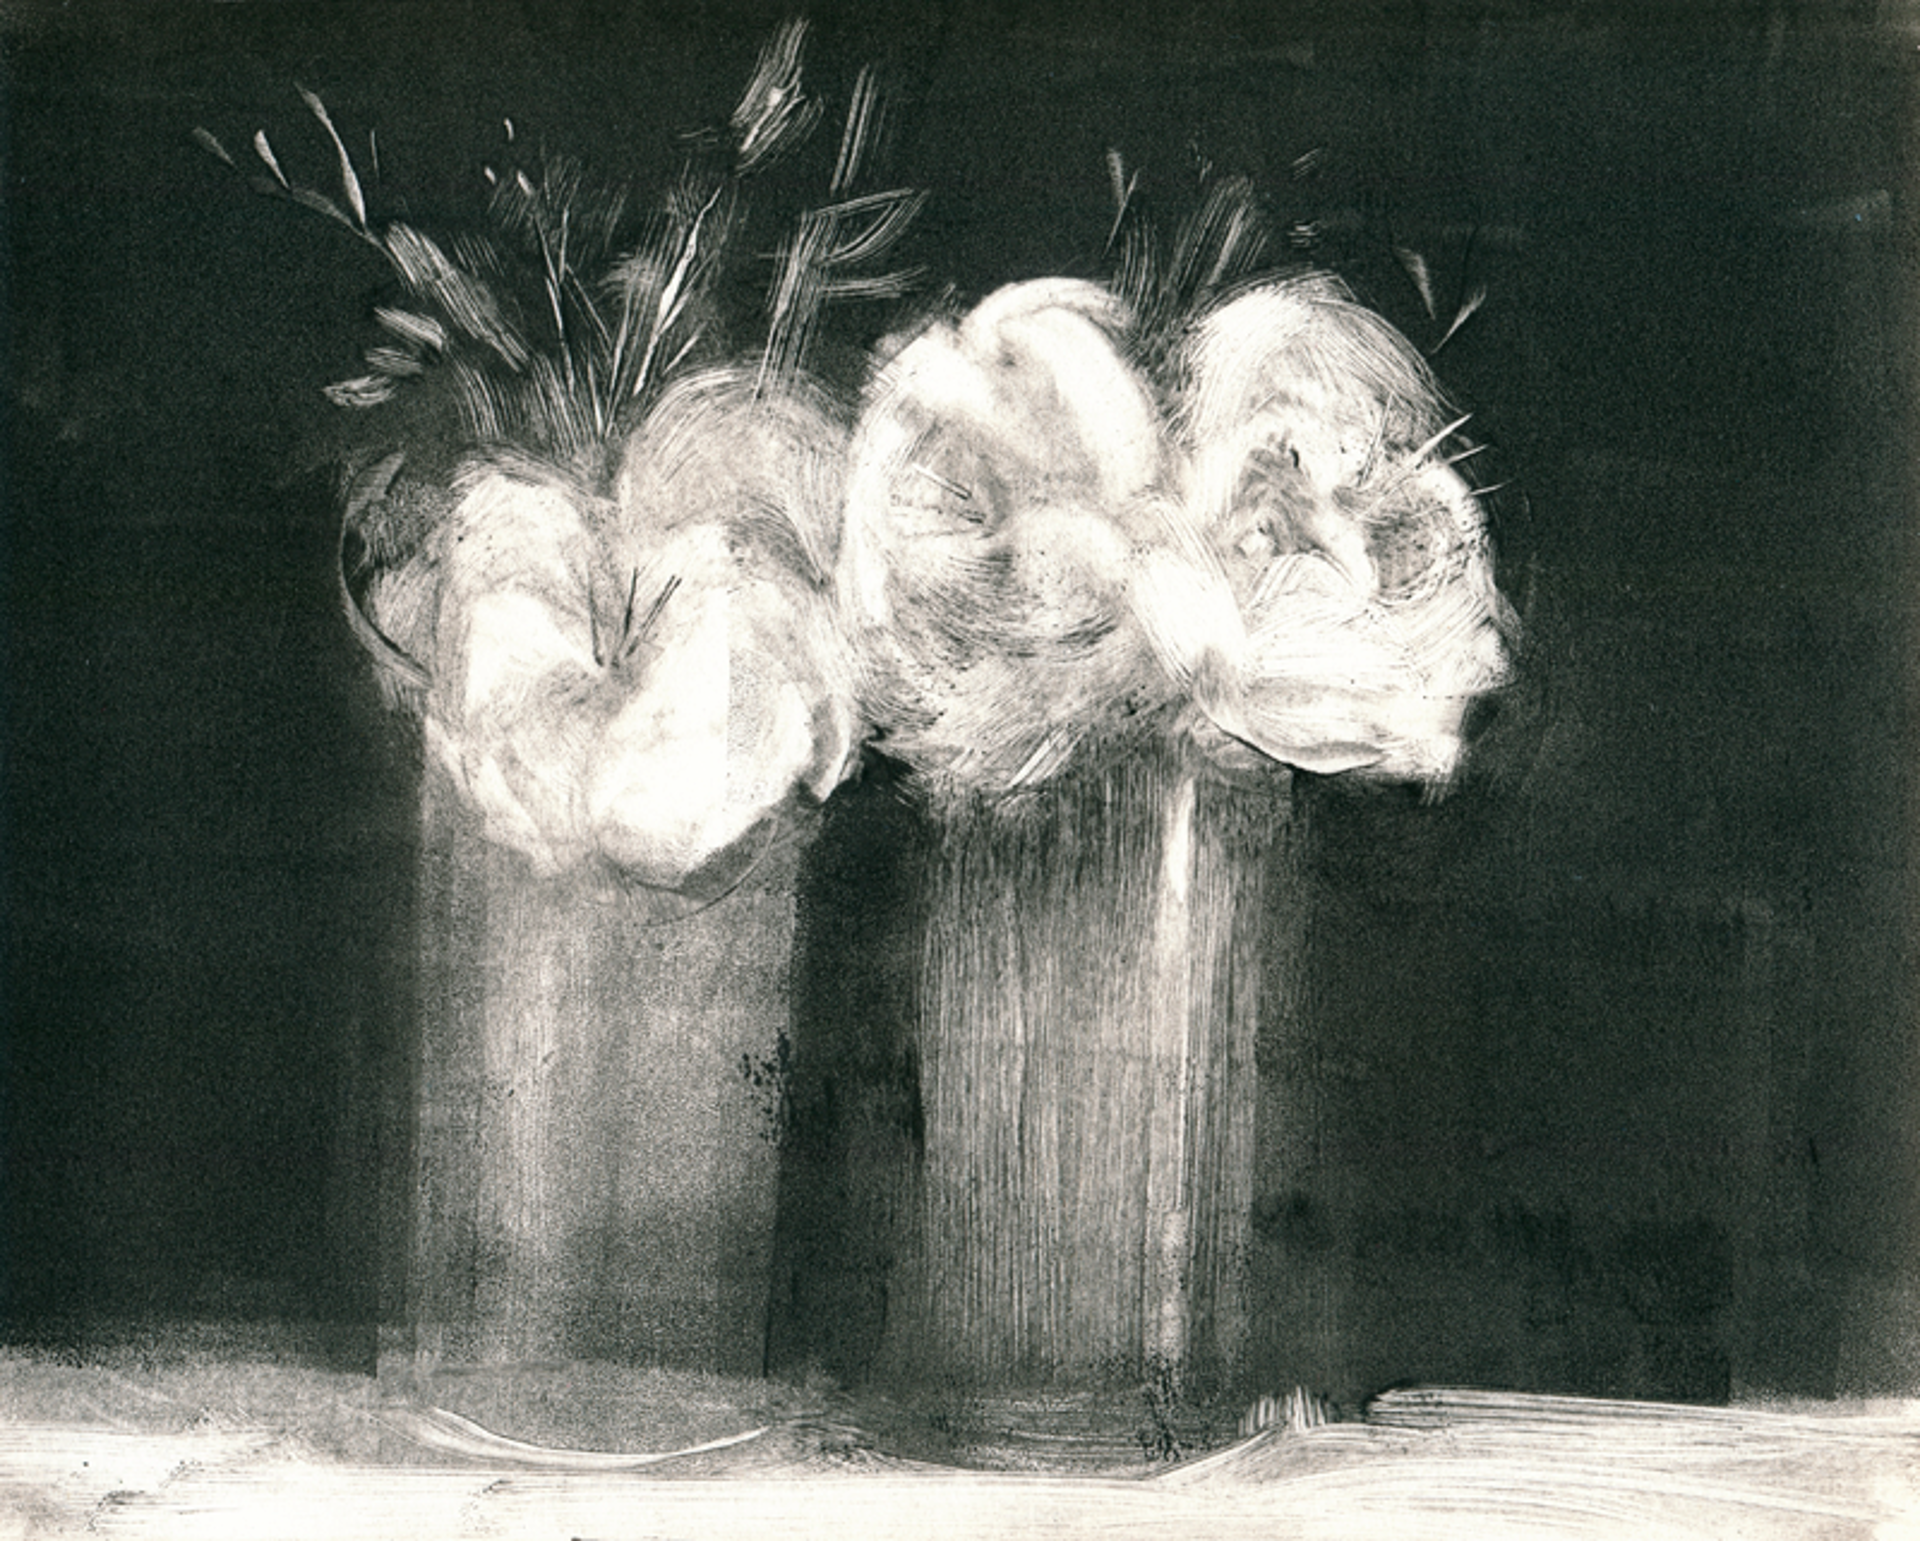 Glass Jars & Flowers III by Steve Dininno